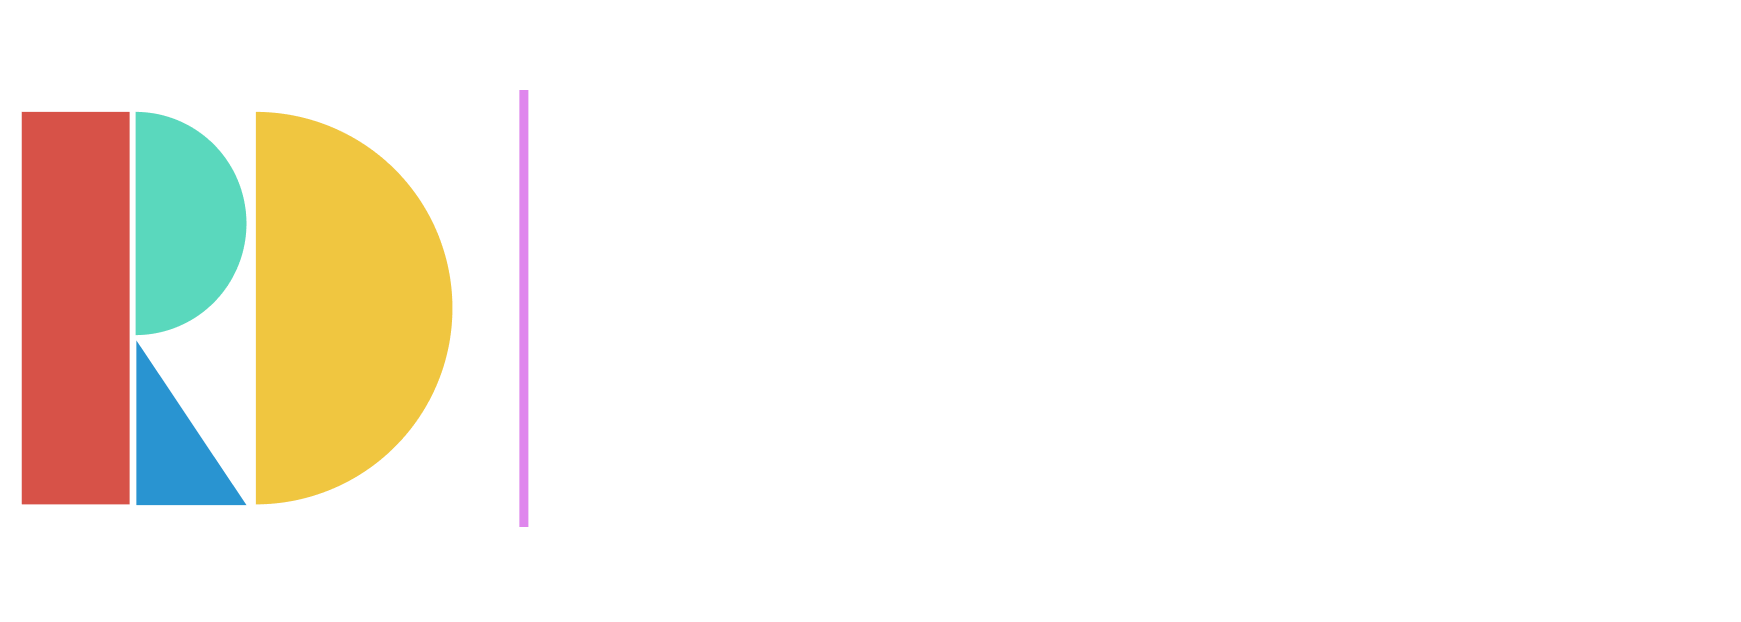 Riccardo De Santis